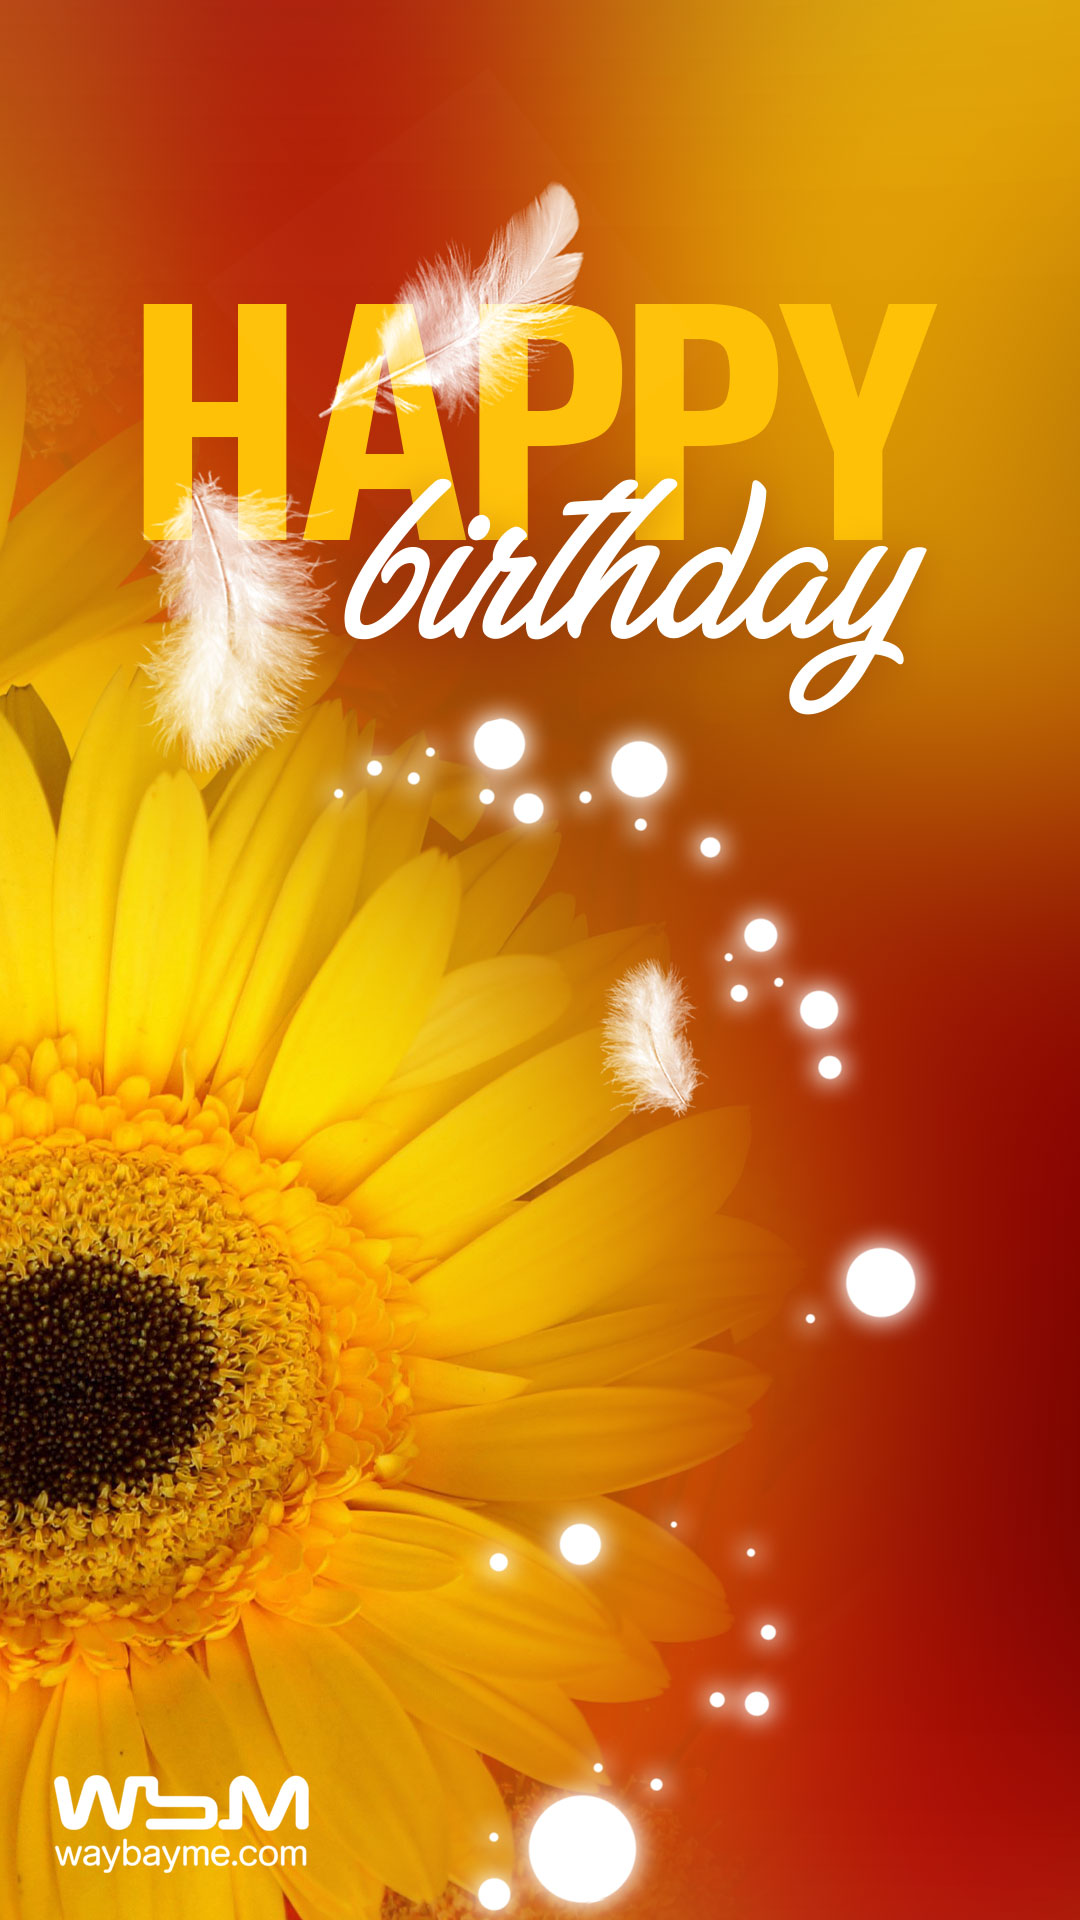 Happy Birthday, Birthday Greetings, Birthday Wishes, Birthday Card, Birthday Image, Birthday Message, Birthday Wishes, Birthday Gift